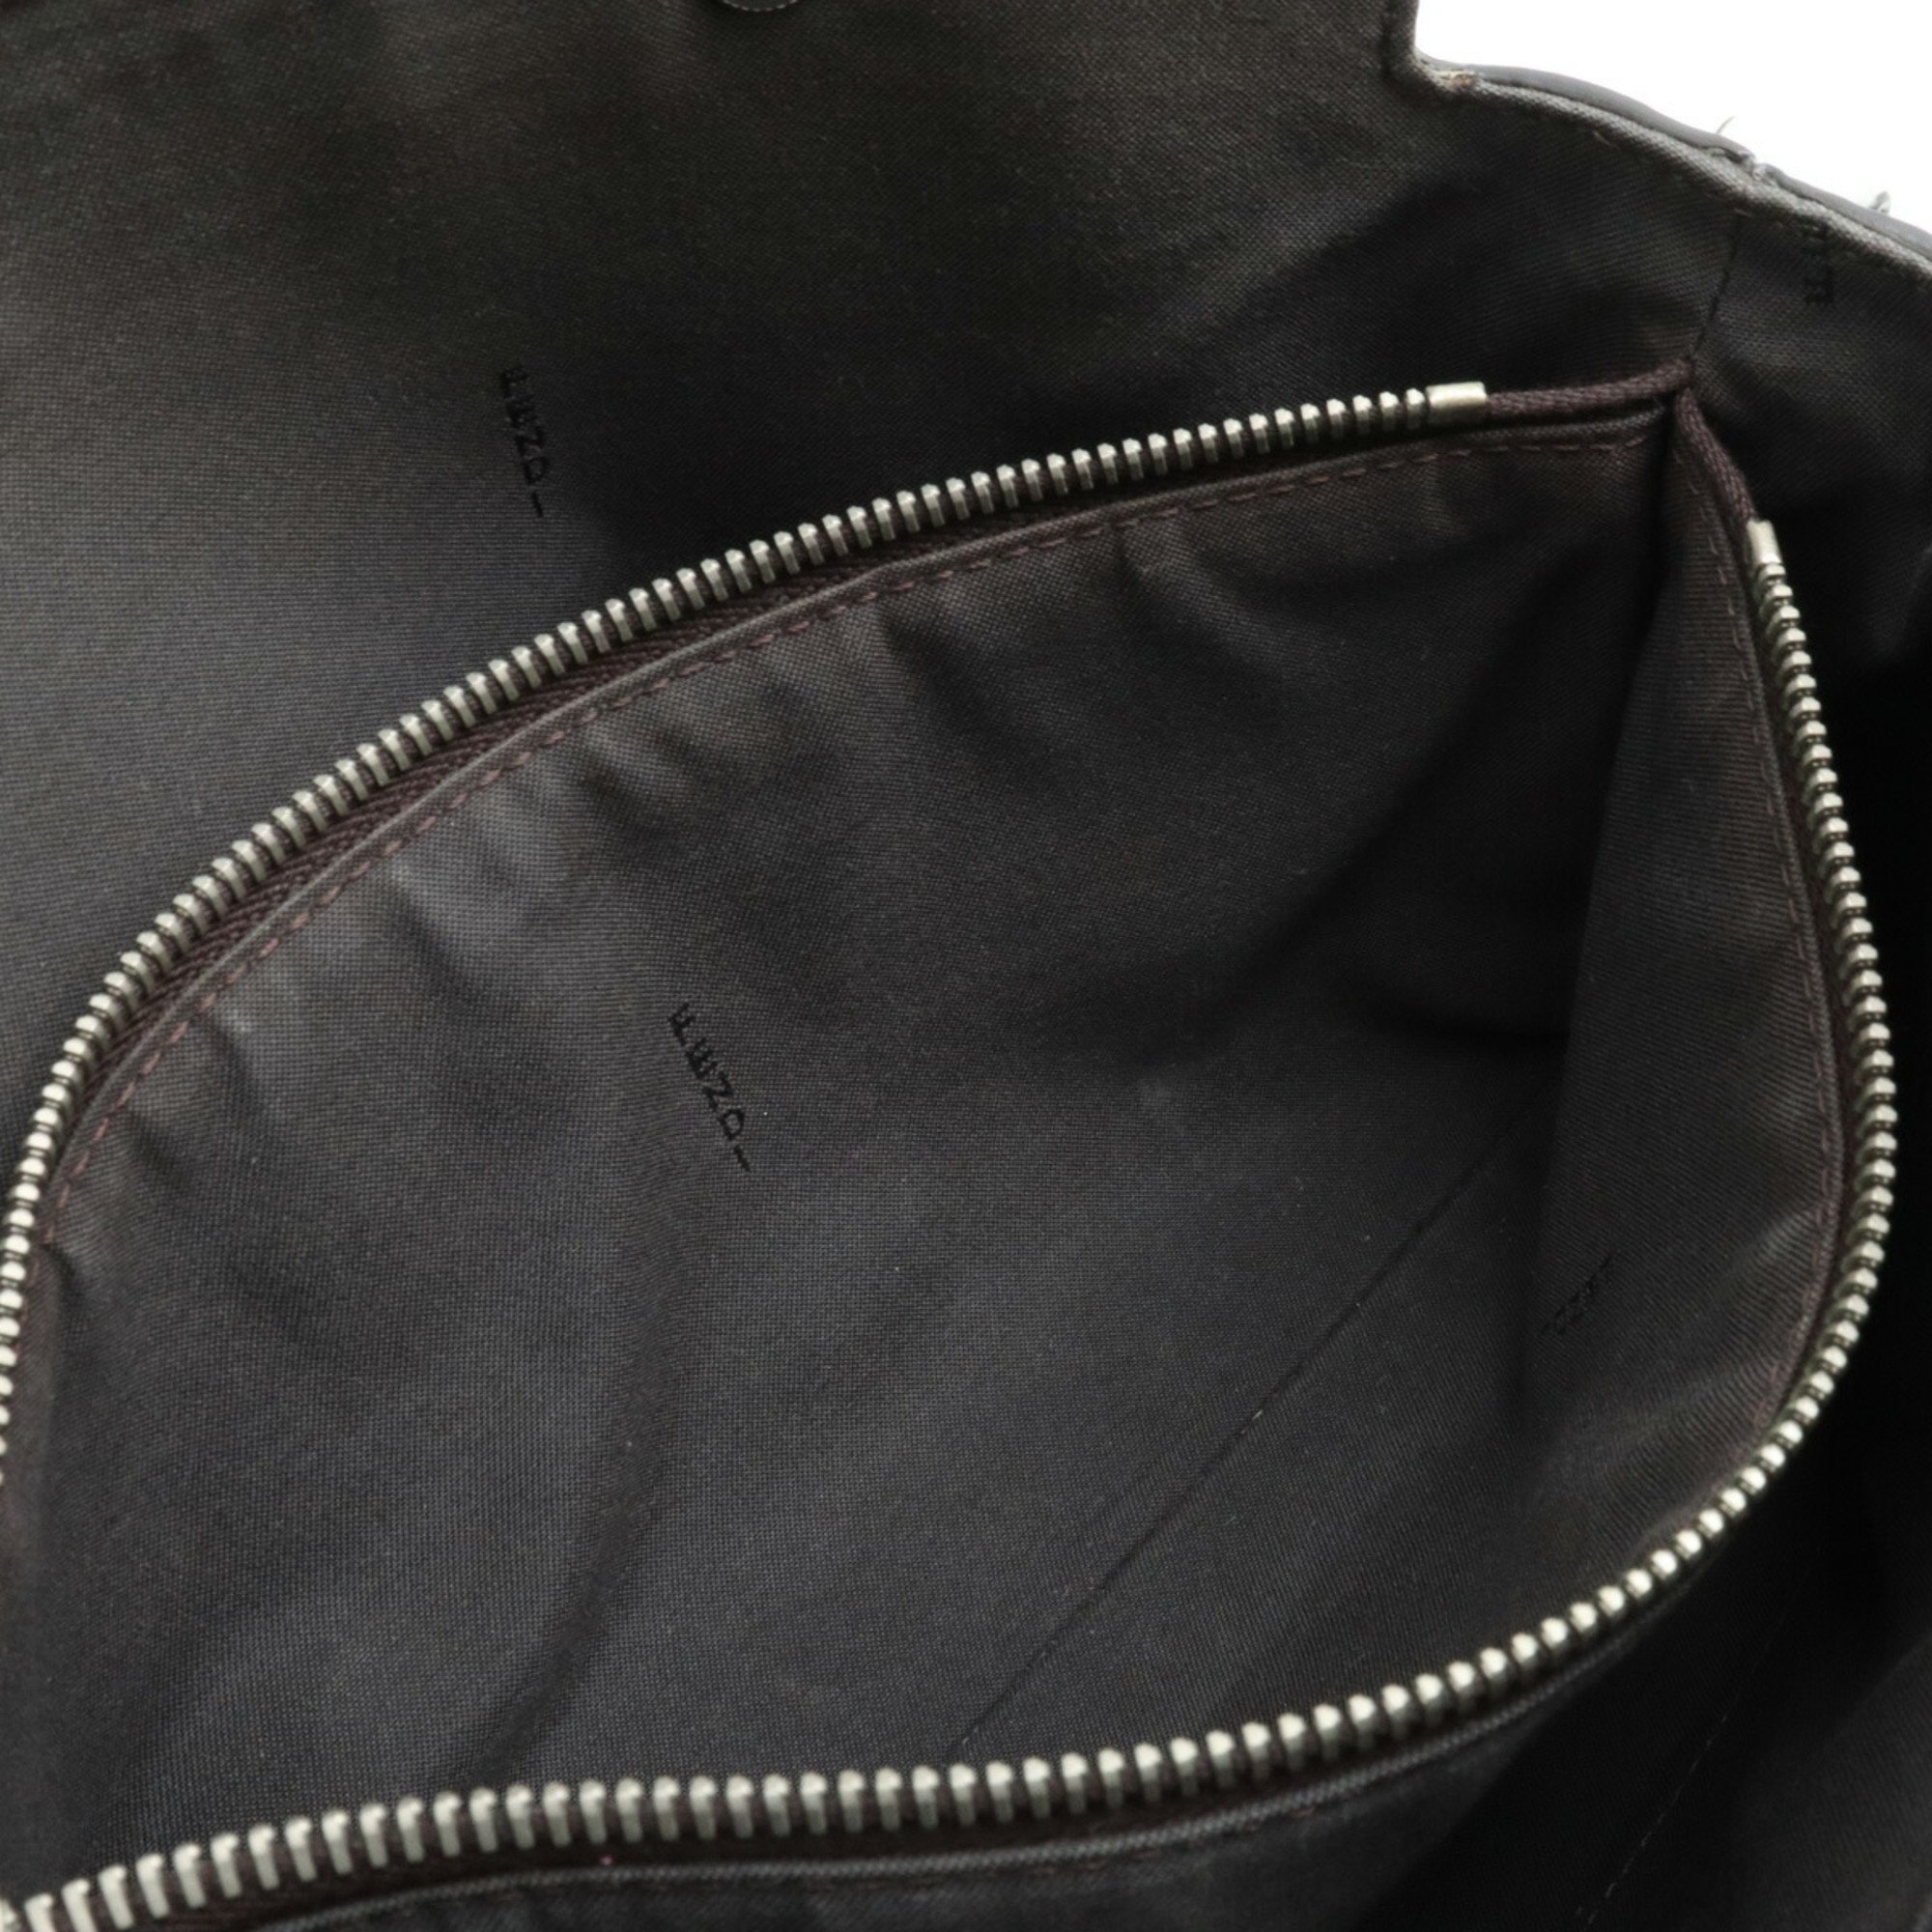 FENDI BY THE WAY Medium Handbag Shoulder Bag Leather Mint Gray 8BL124